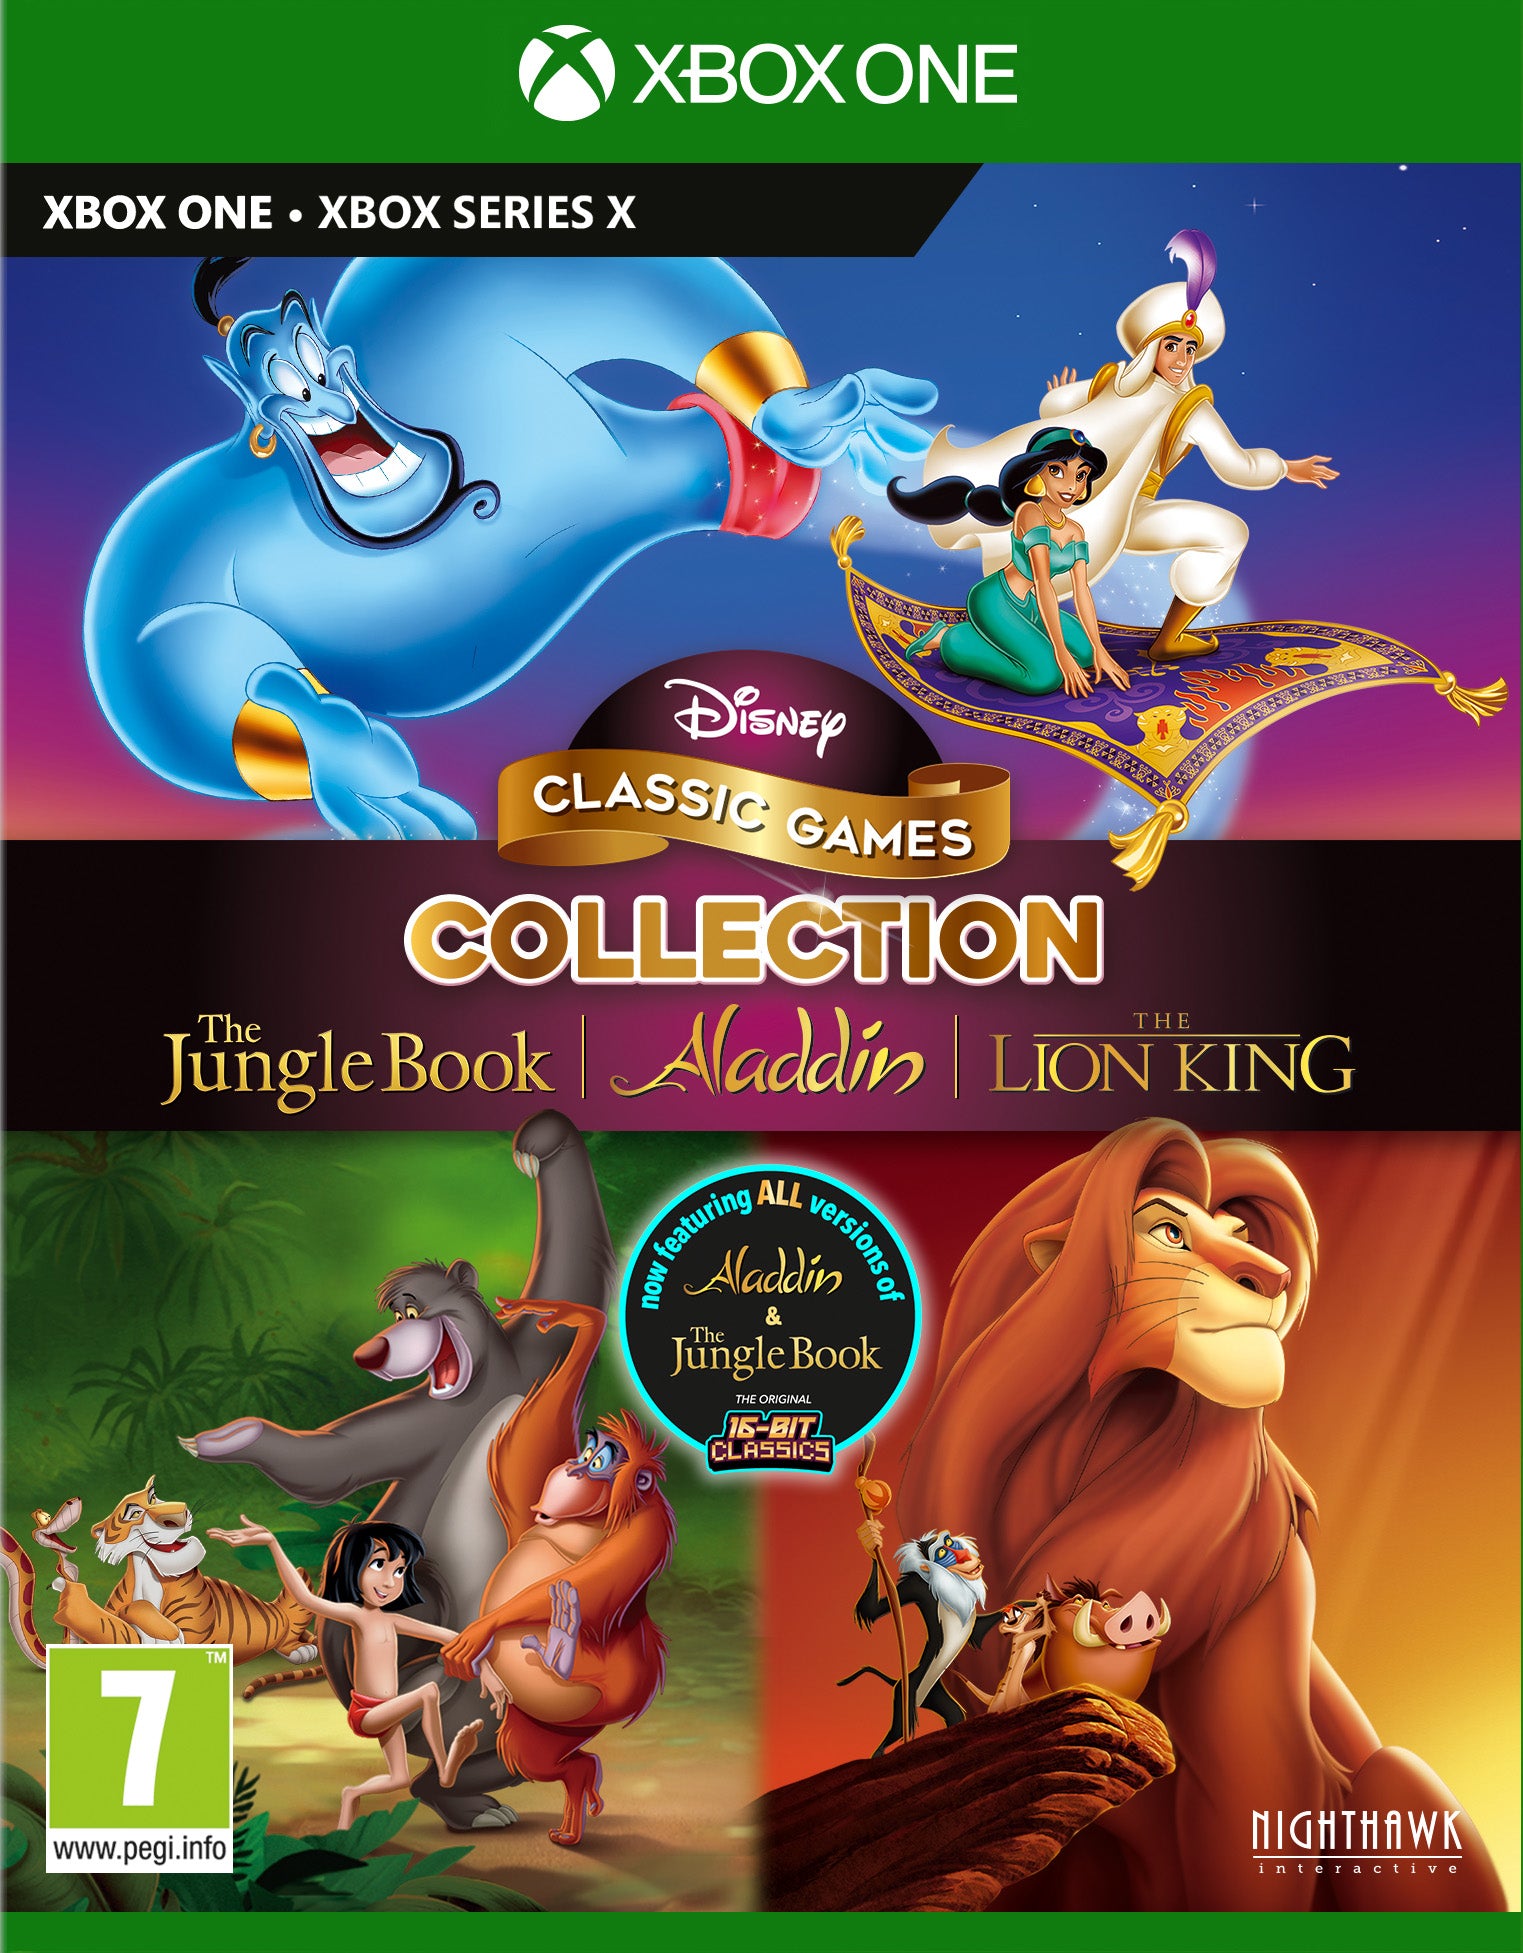 Disney Classic Games Definitiv